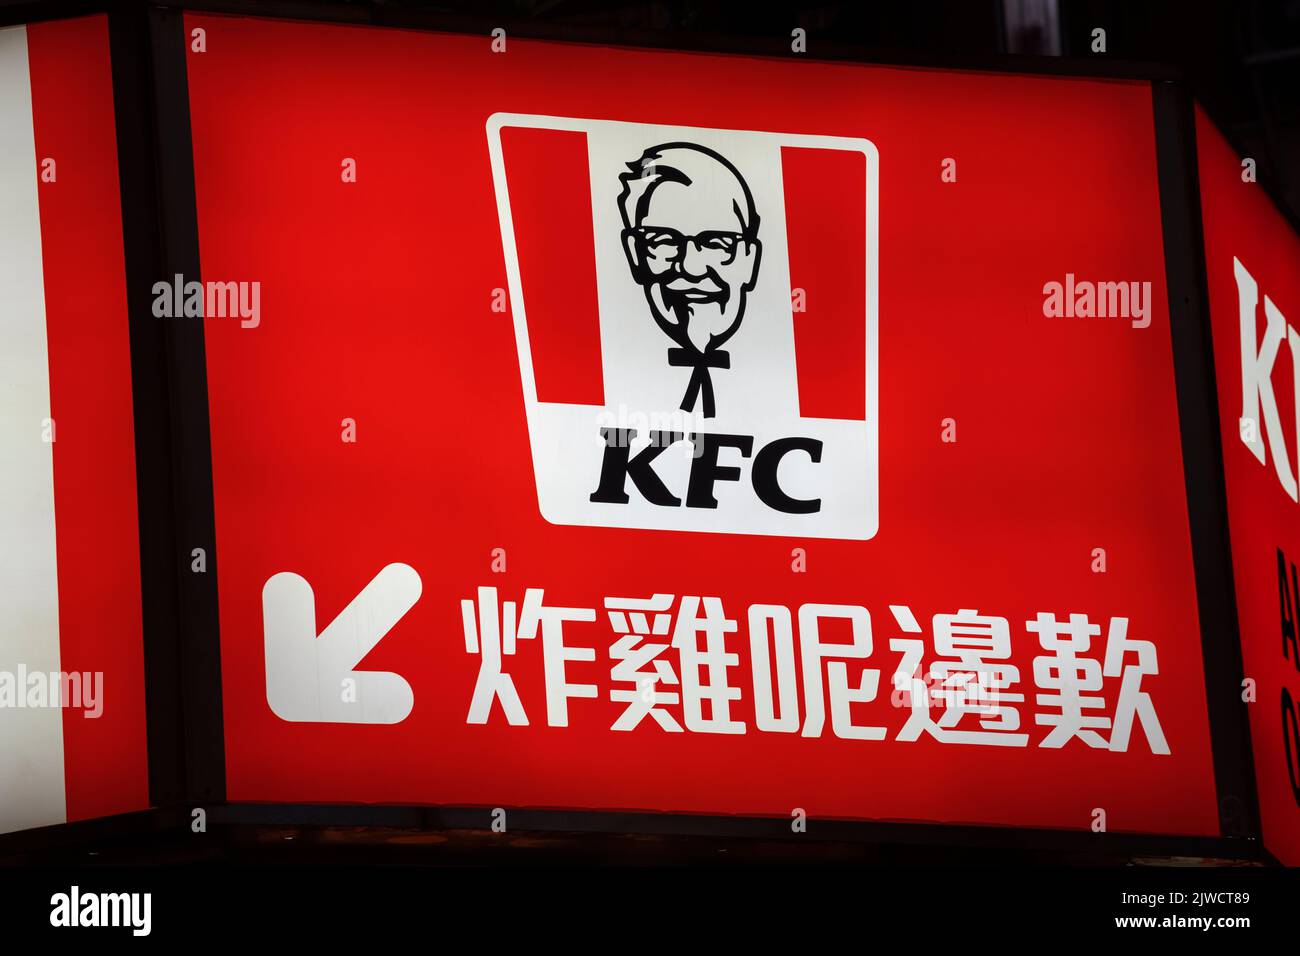 American fast food chicken restaurant chain Kentucky Fried Chicken (KFC) restaurant, Hong Kong, China. Stock Photo